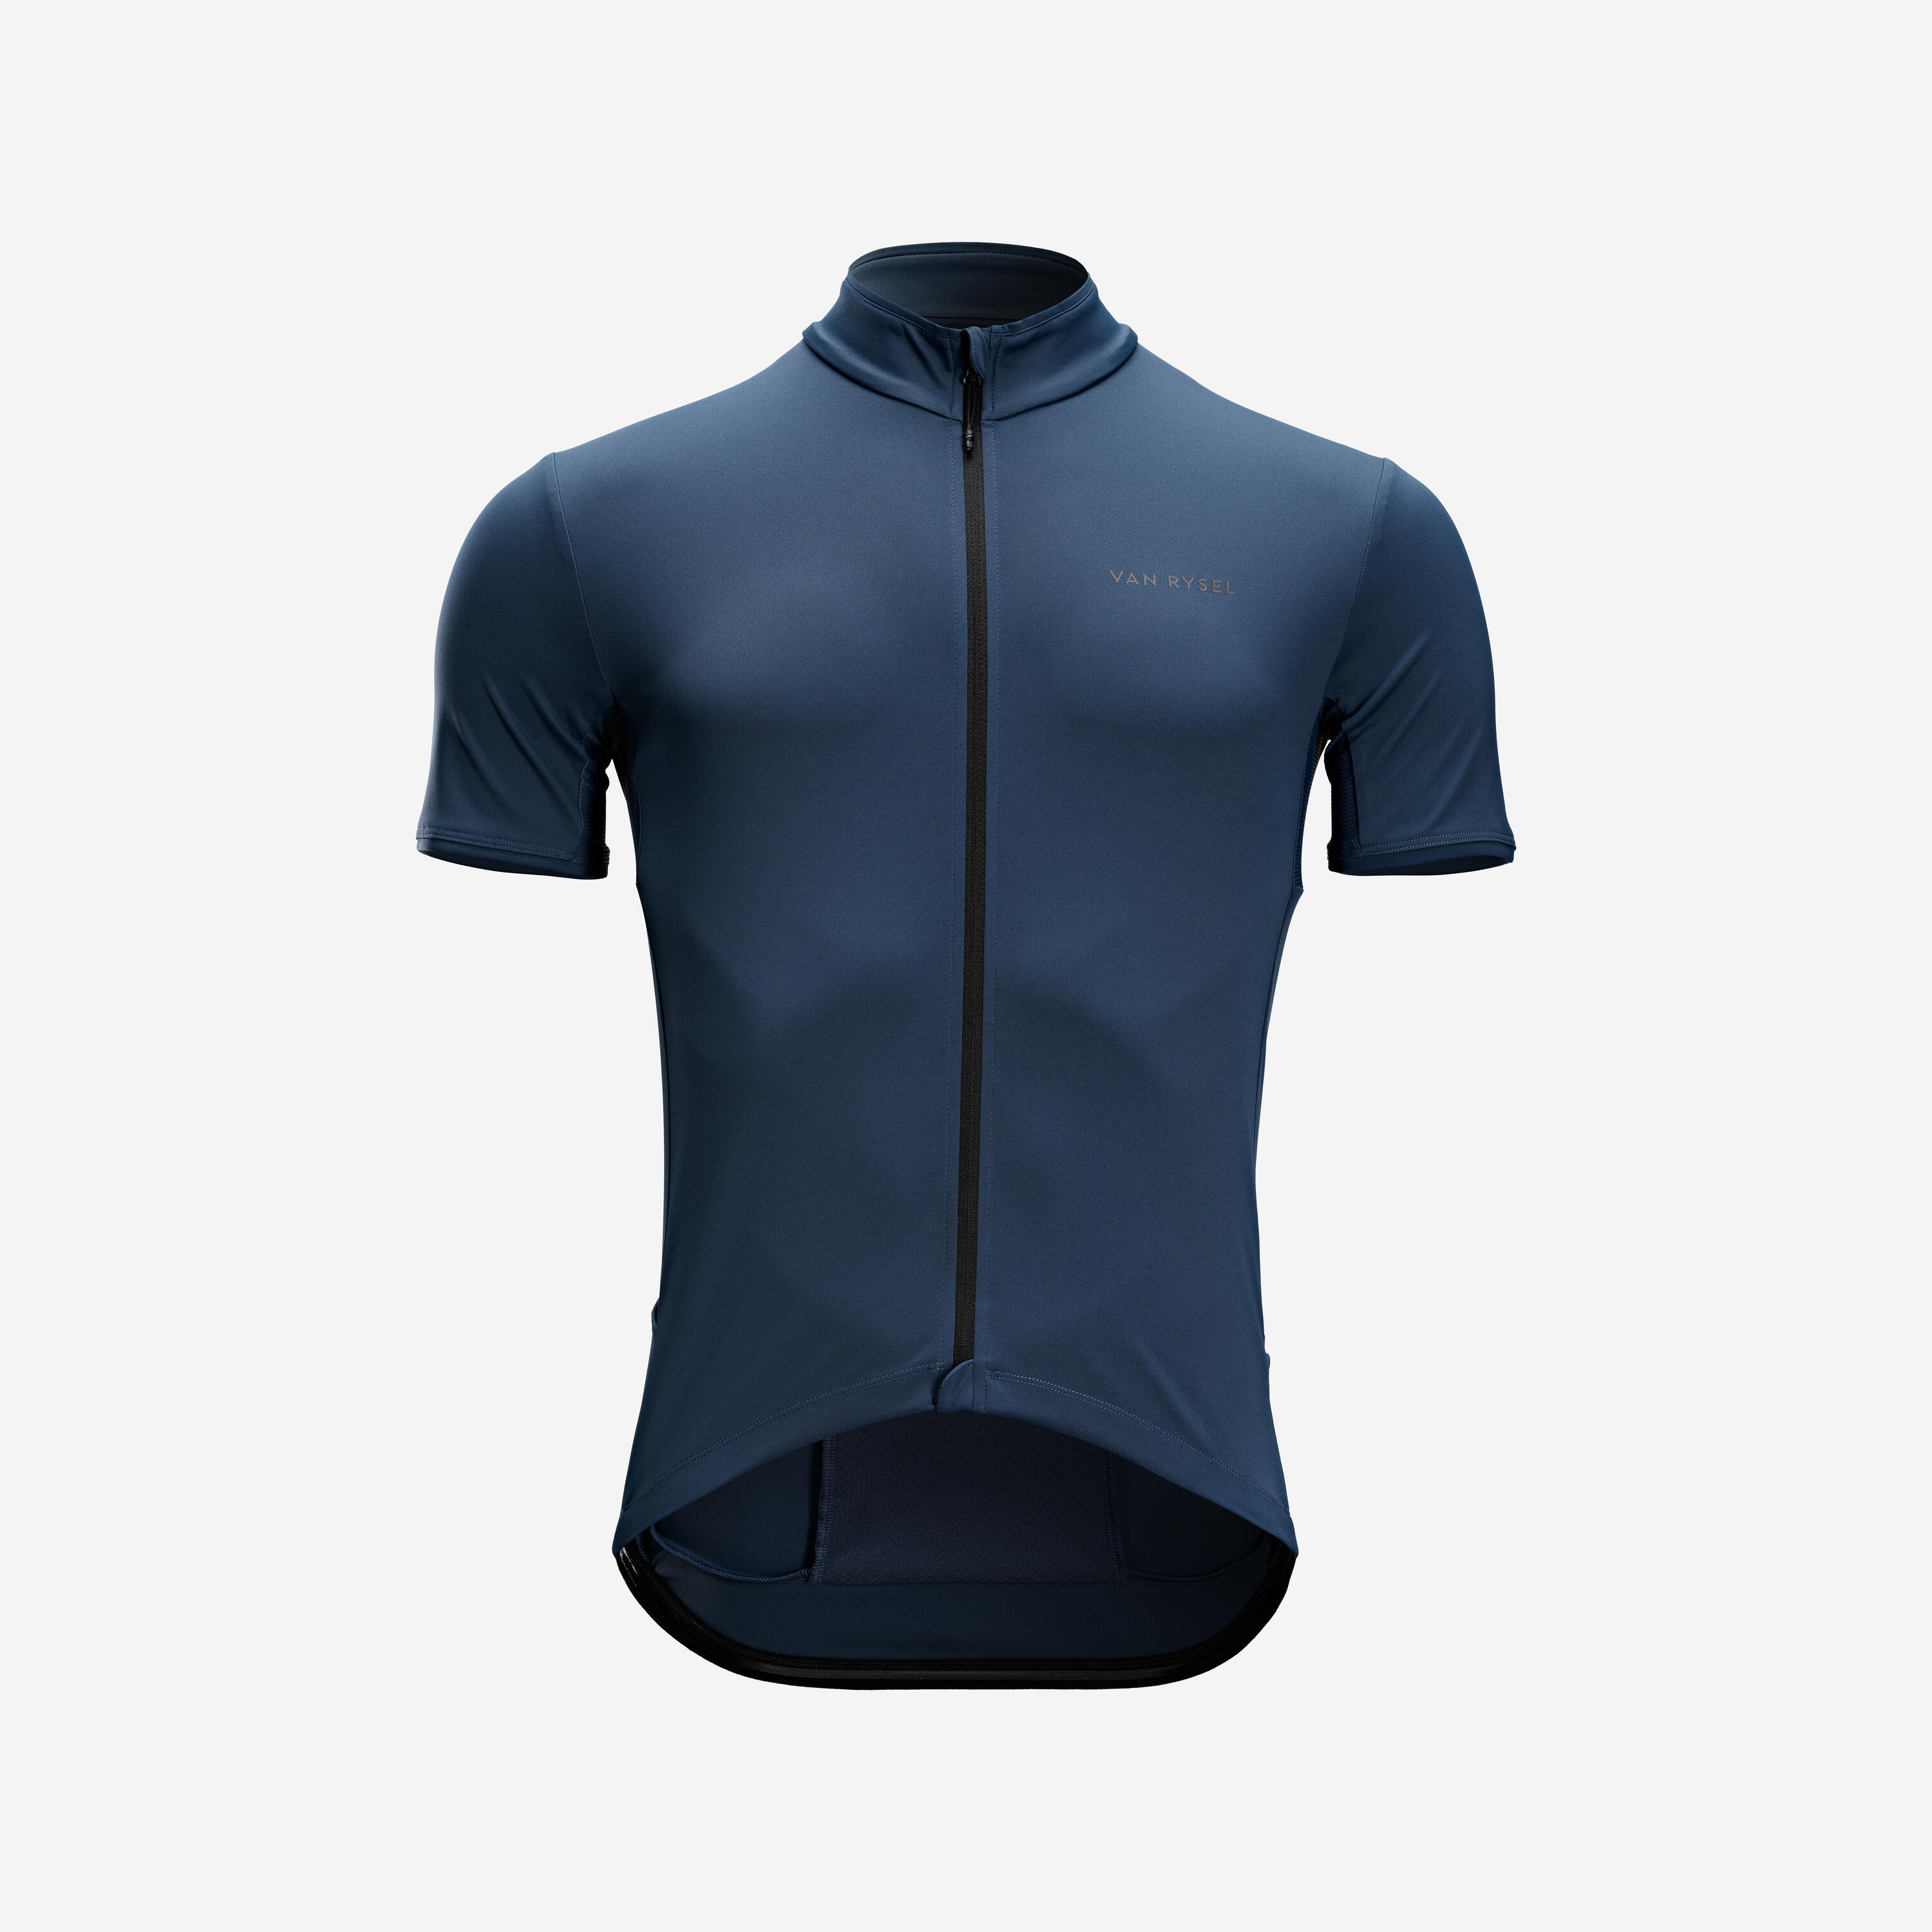 VAN RYSEL Men's Road Cycling Short-Sleeved Summer Jersey Endurance - Slate Blue